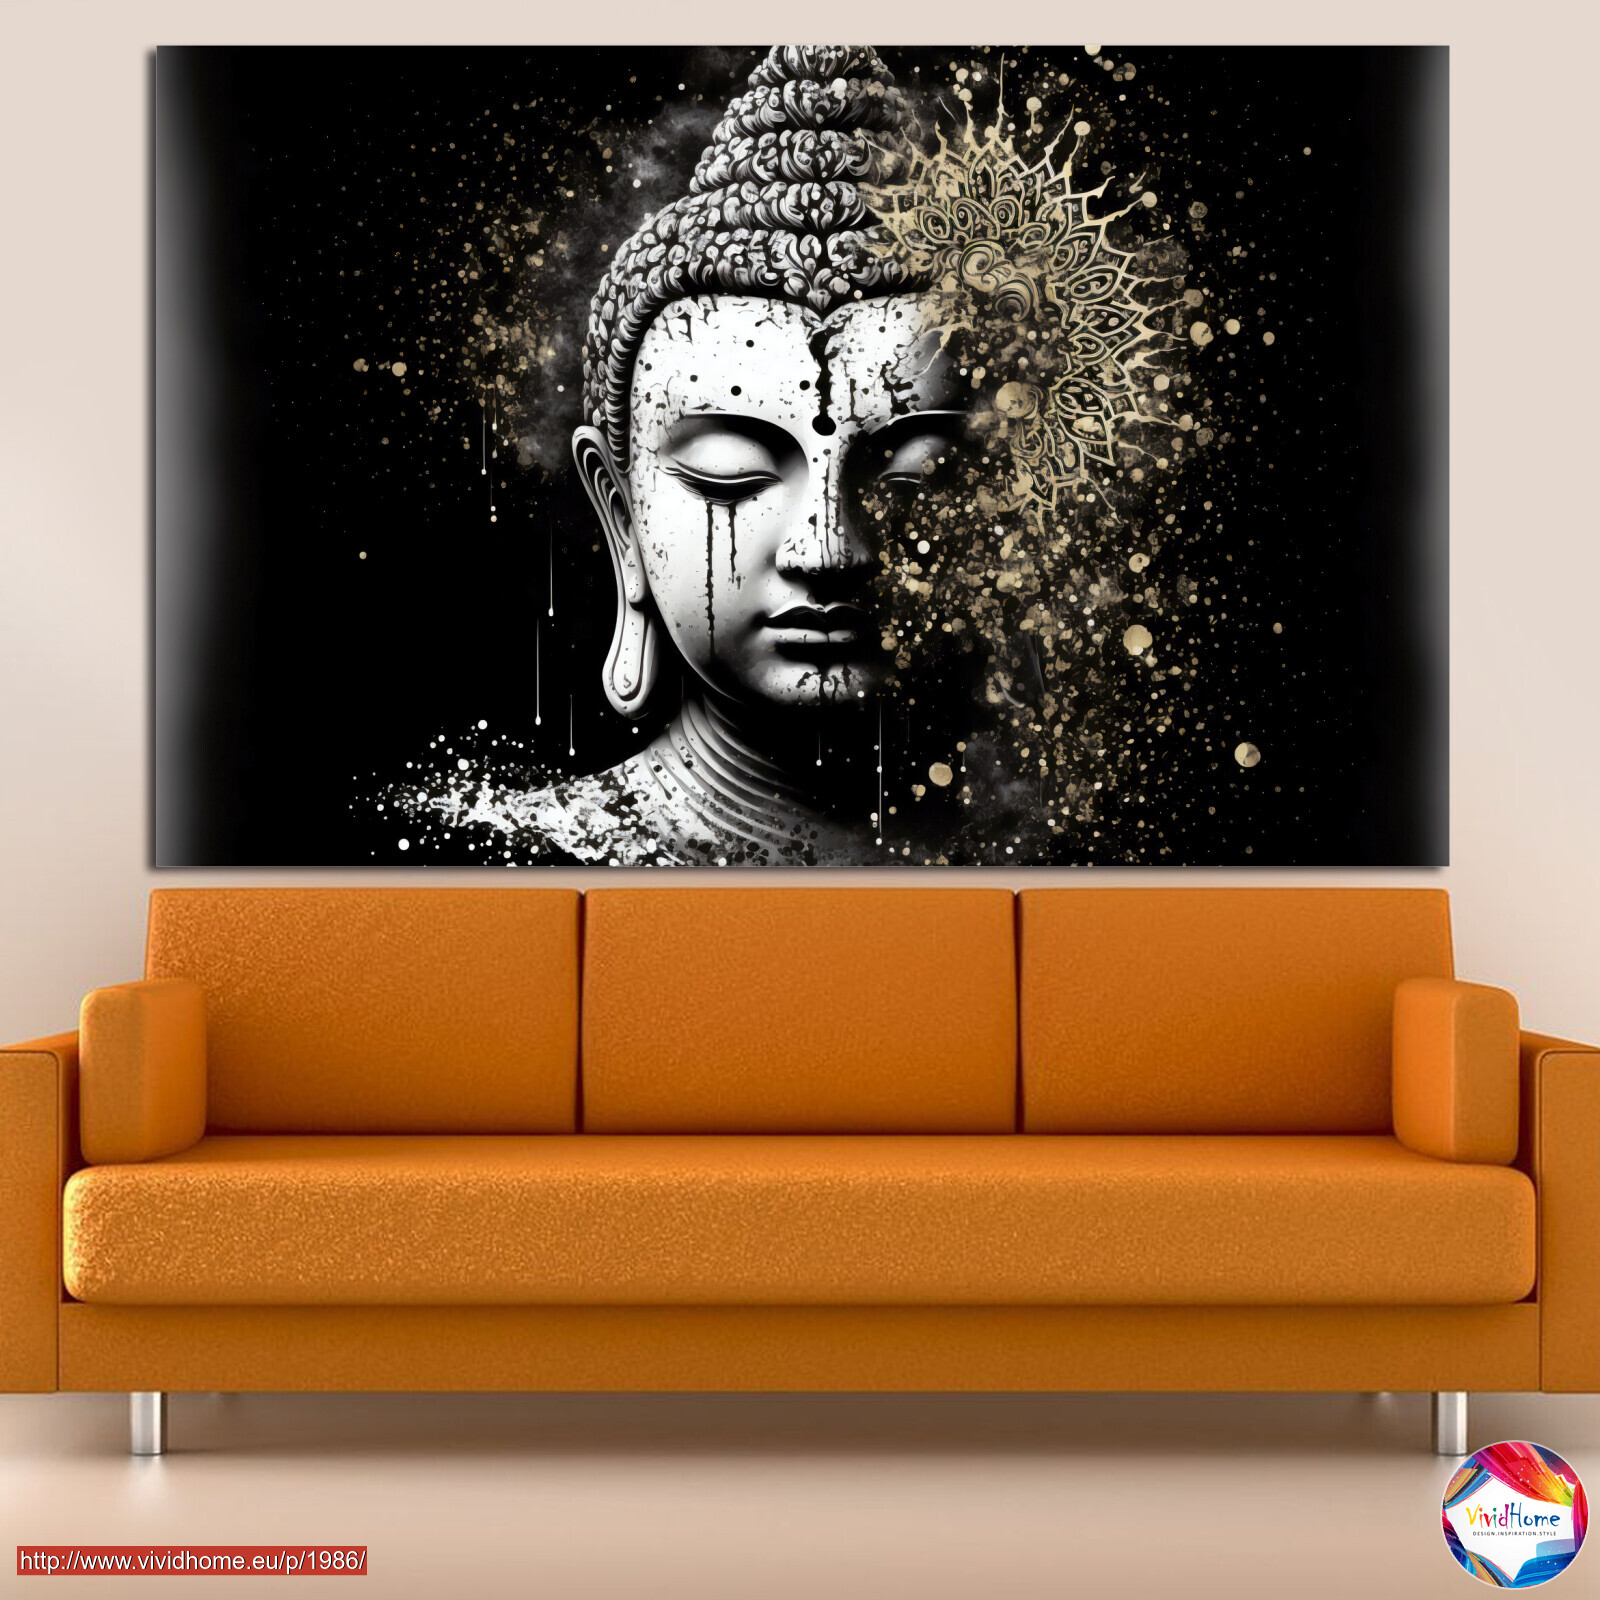 The Spirituality of the 1 1 №1001 Buddha piece